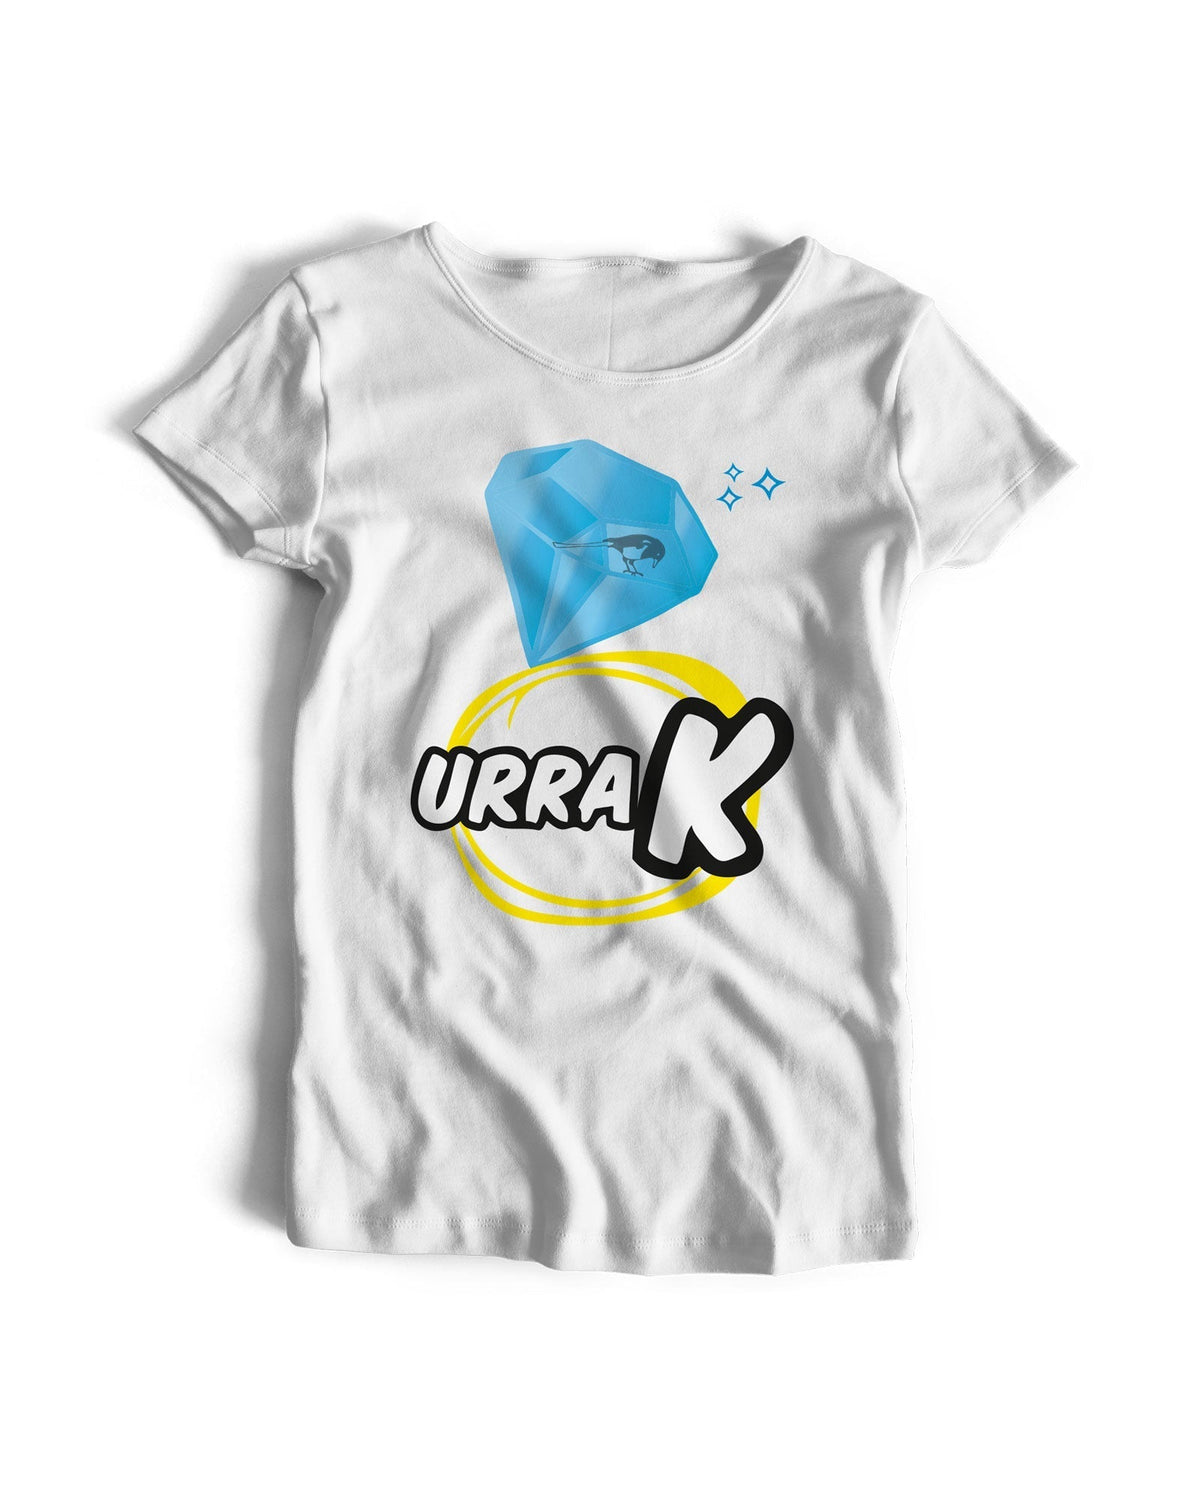 Camiseta URRAK Anillo - Blanco - D2fy · Rocktud - Urrak